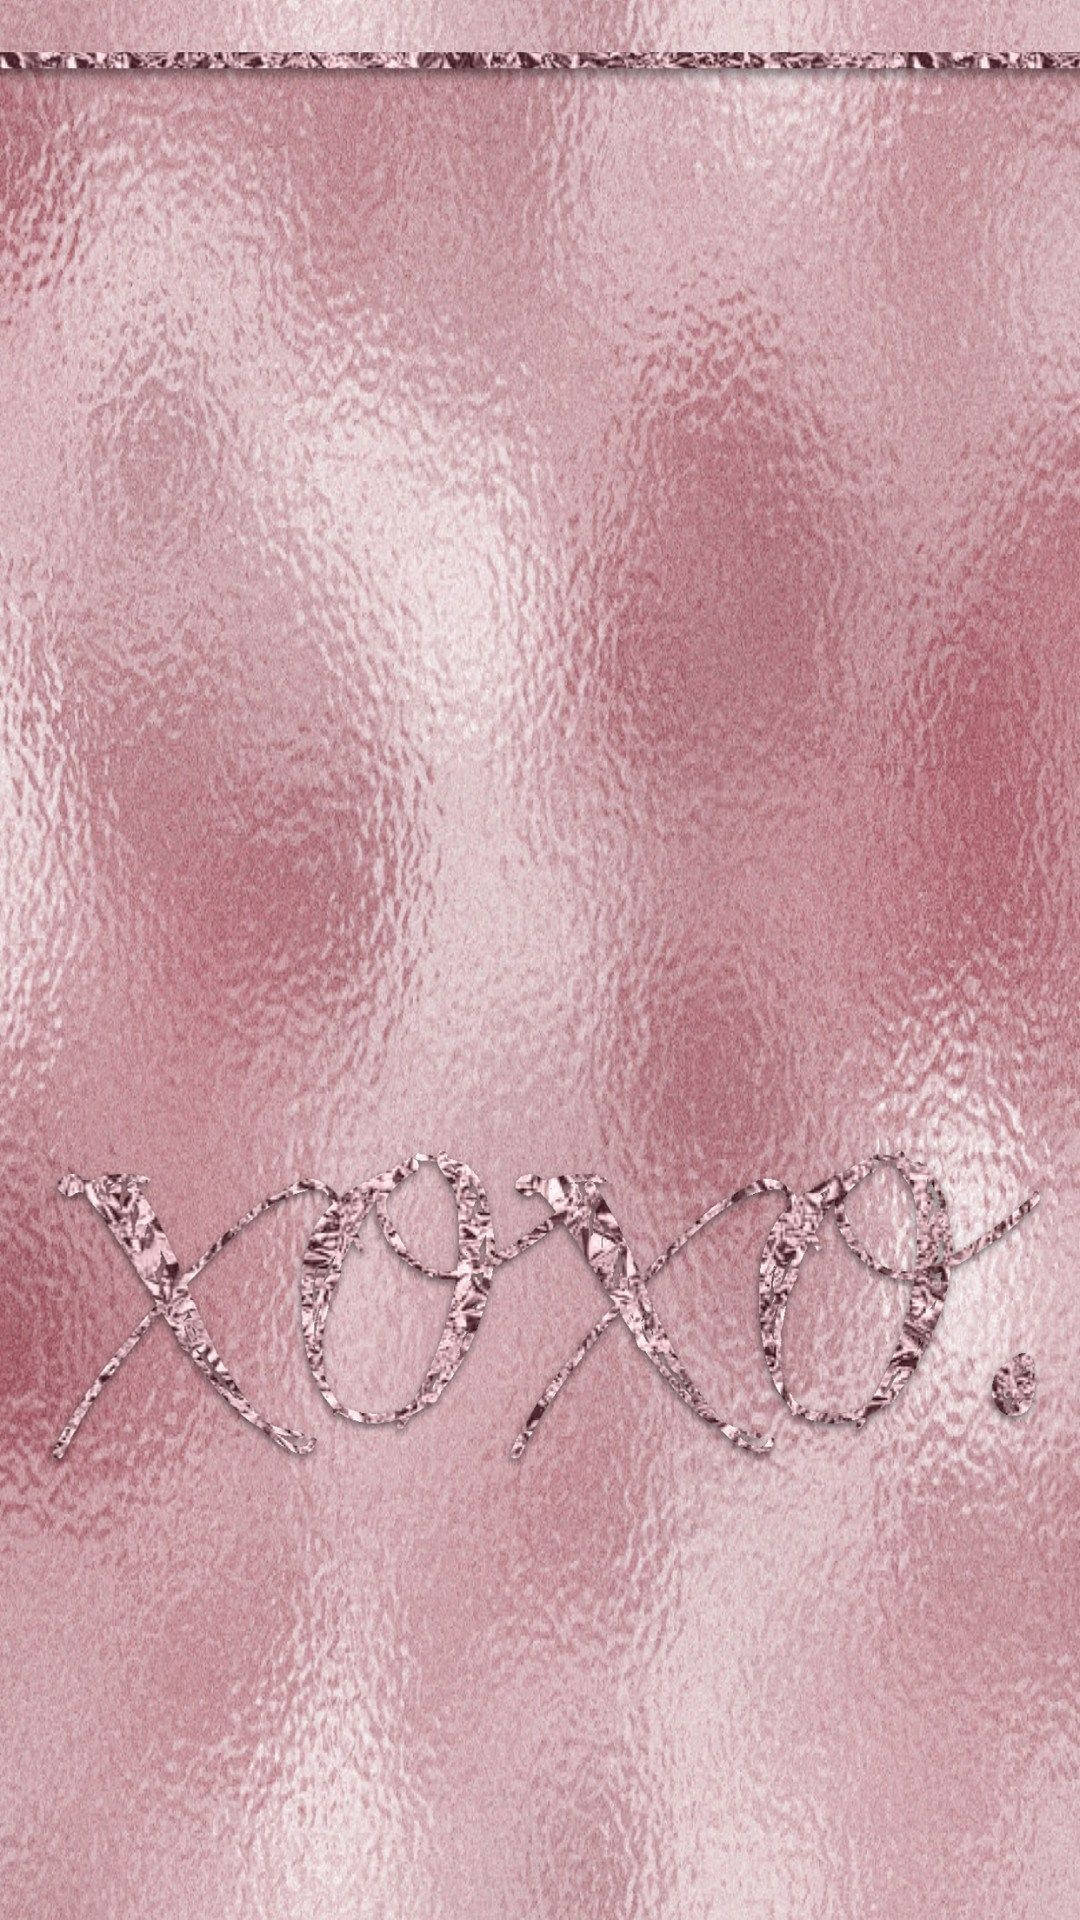 Rose Gold Aesthetic Xoxo Wallpaper